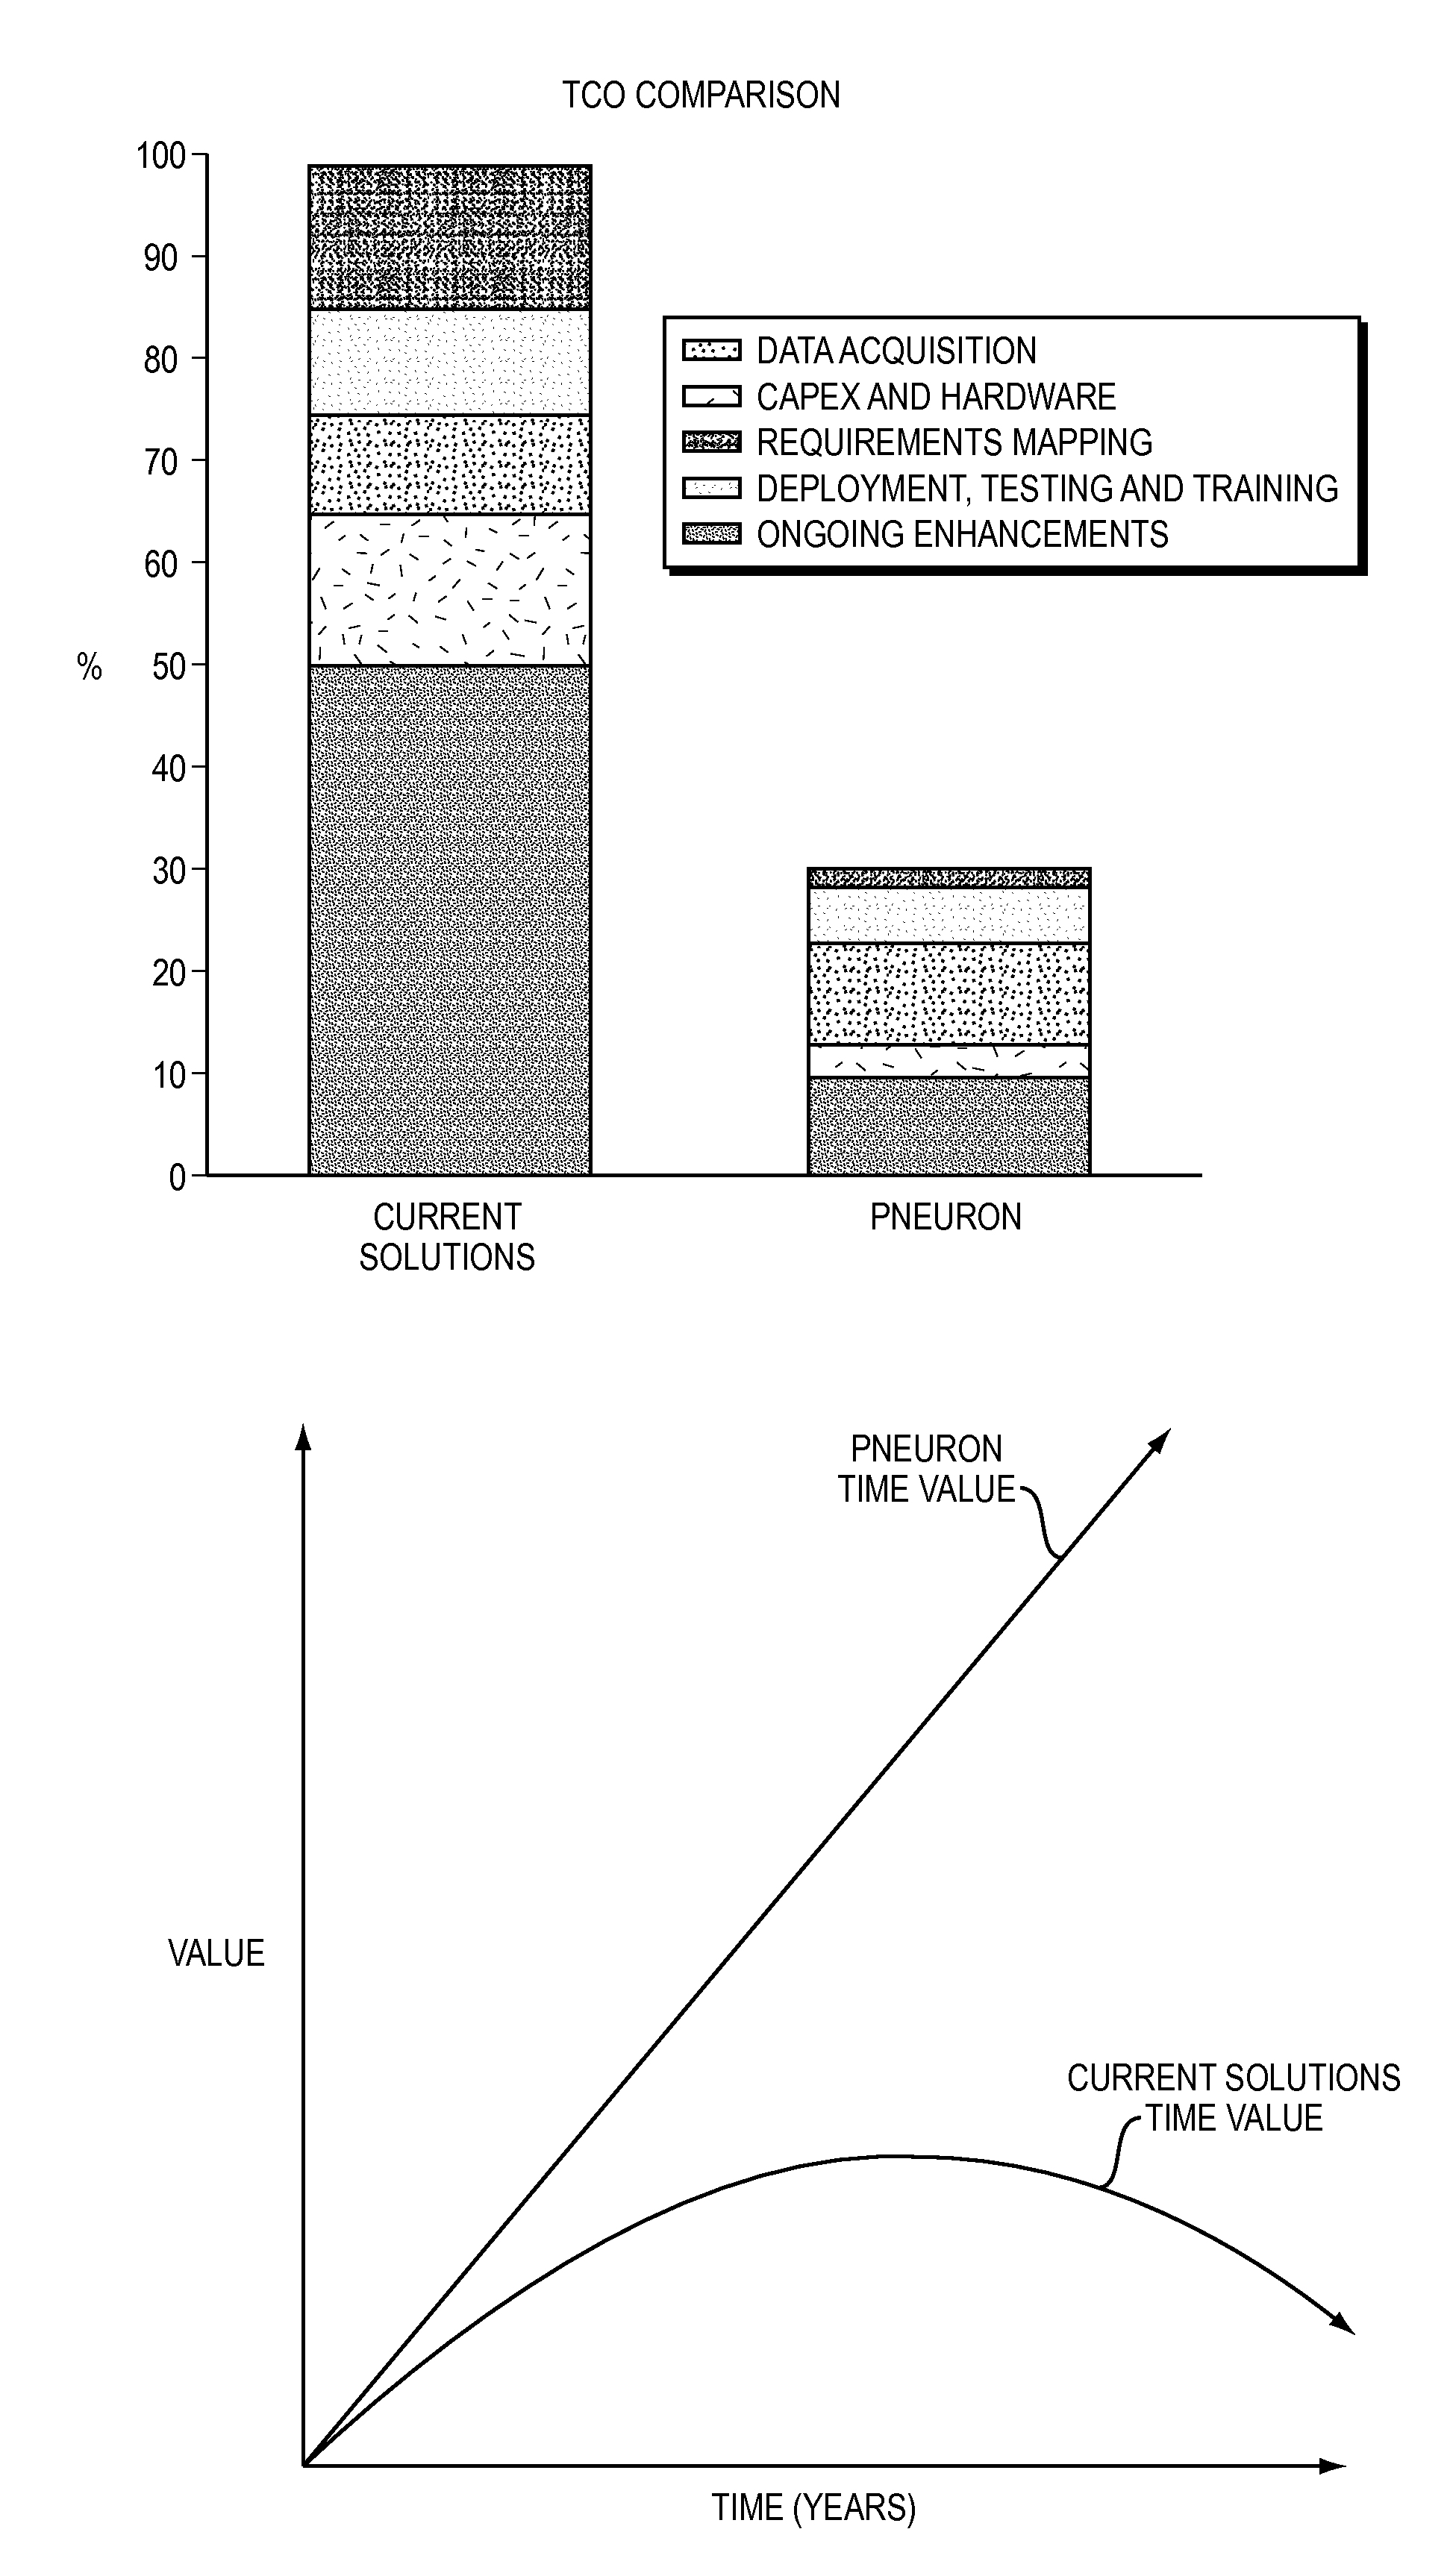 Pneuron distributed analytics